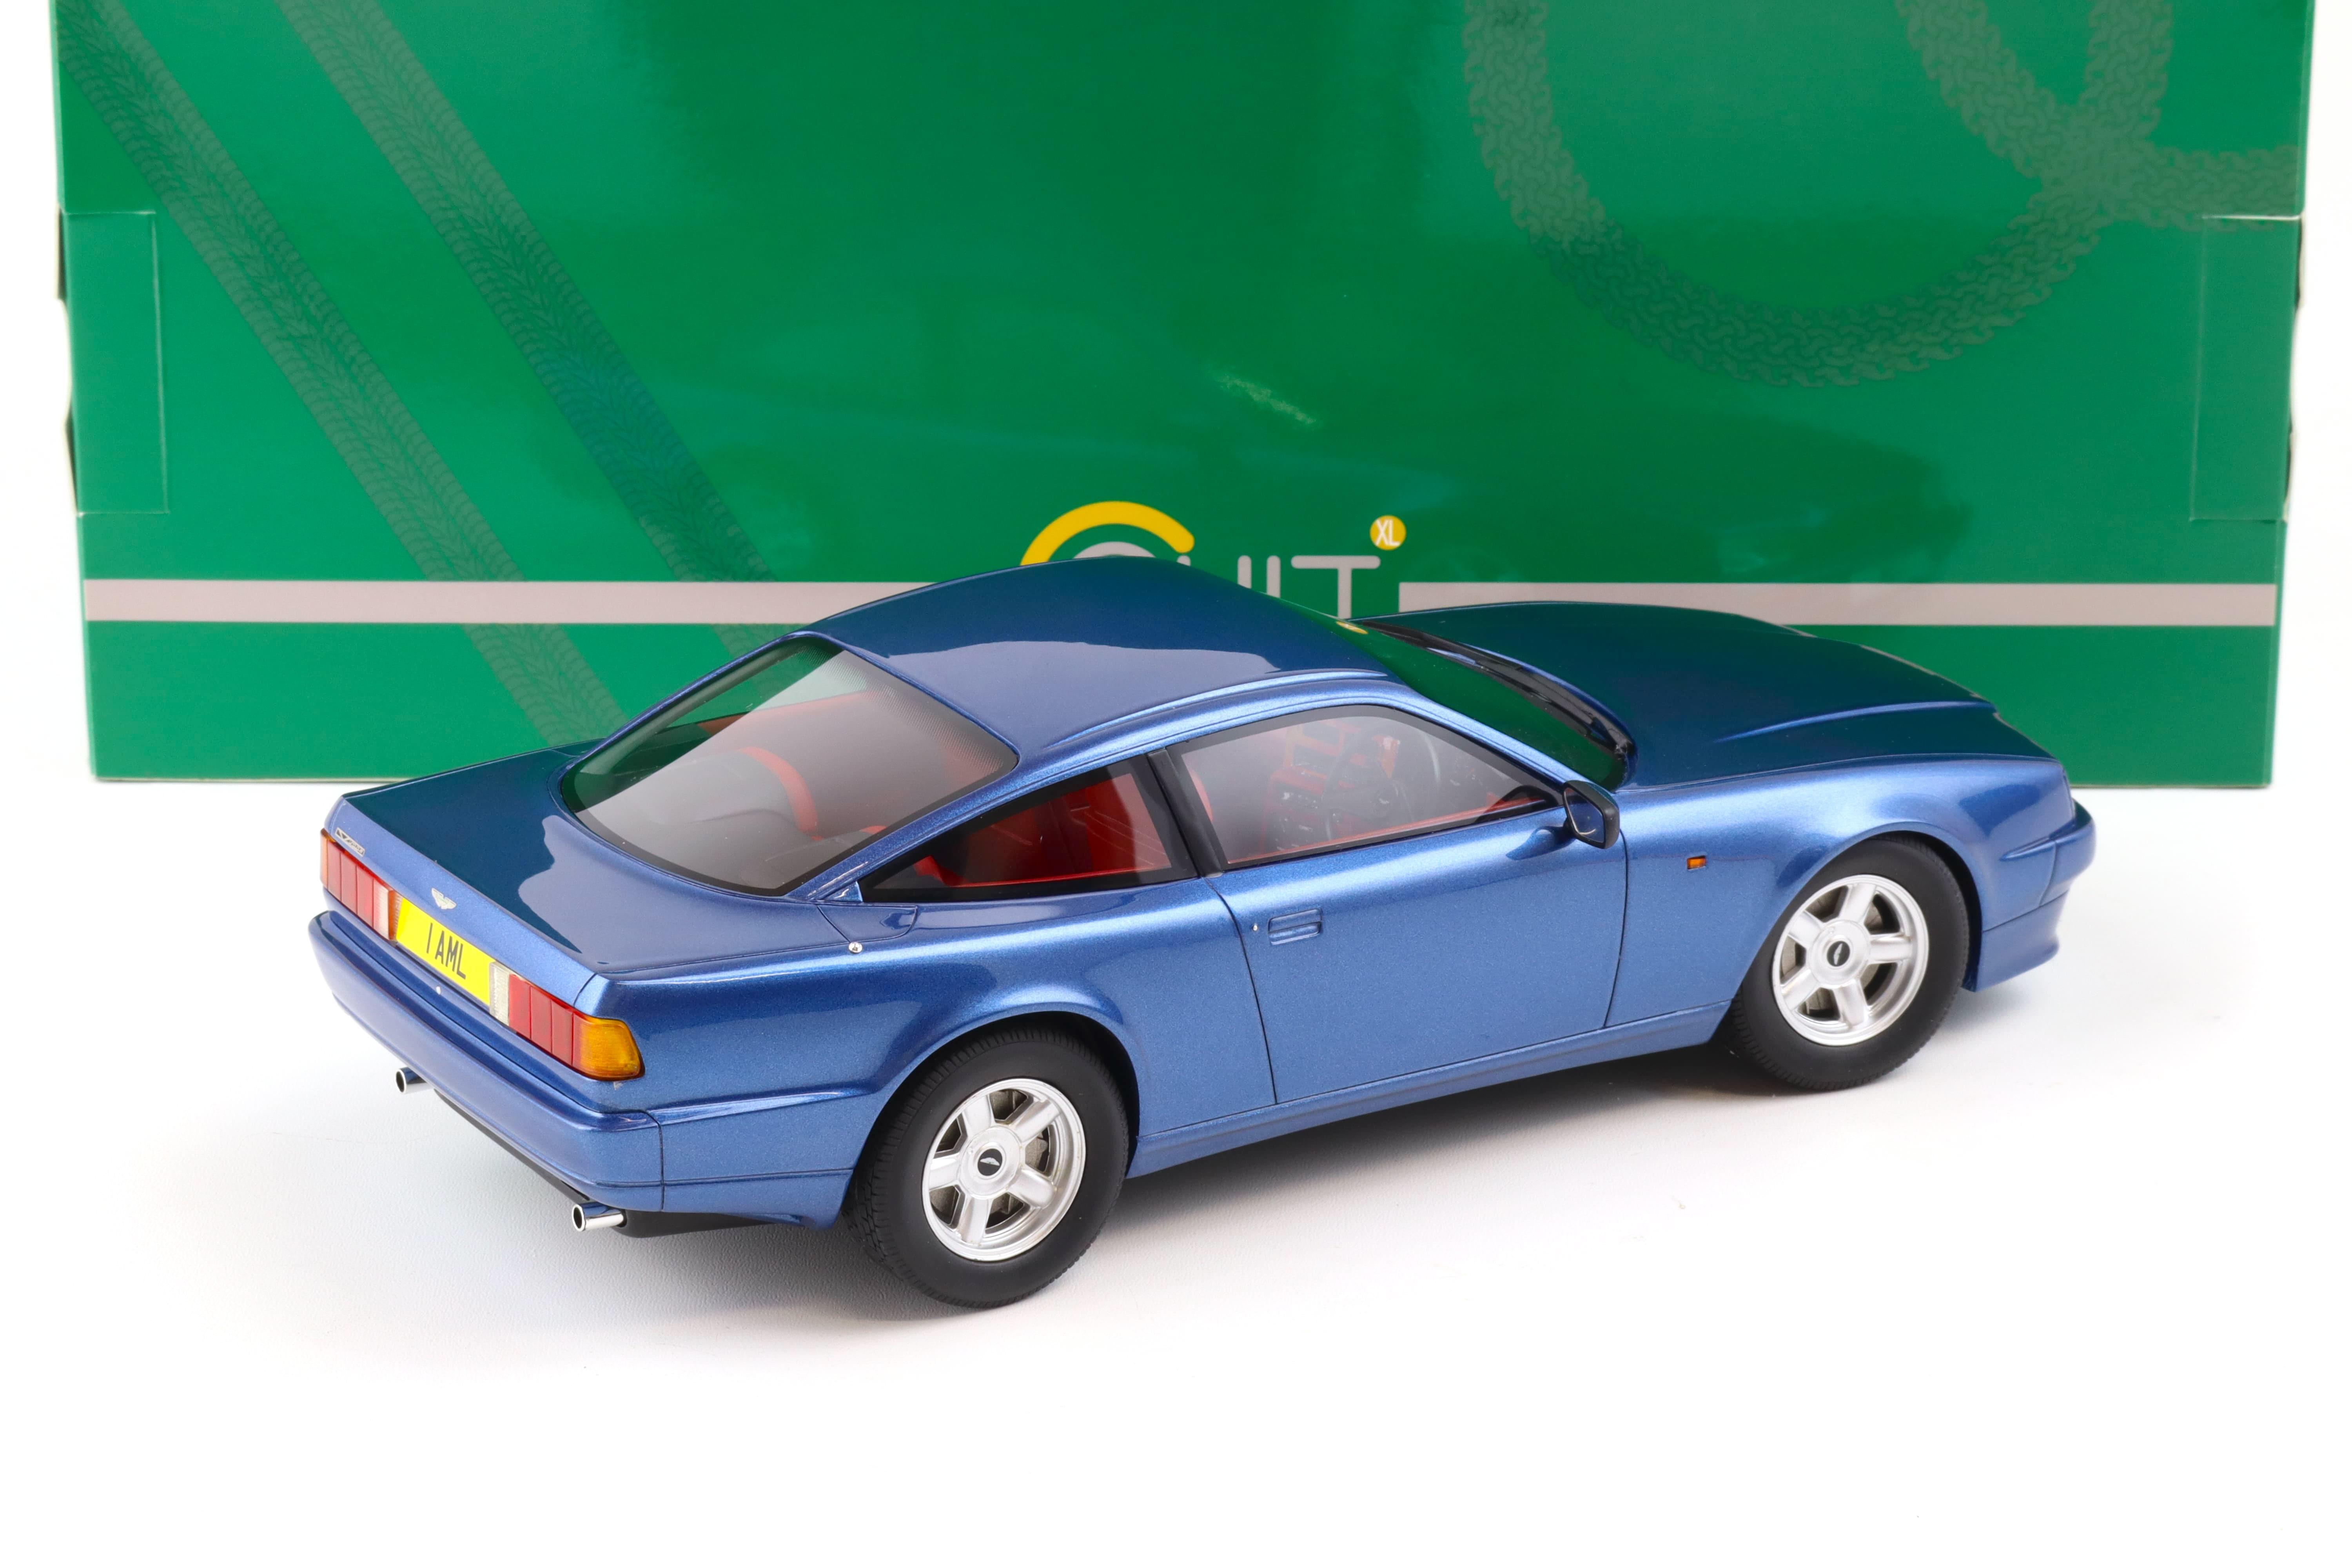 1:18 Cult Scale Models Aston Martin Virage Coupe 1988 blue metallic